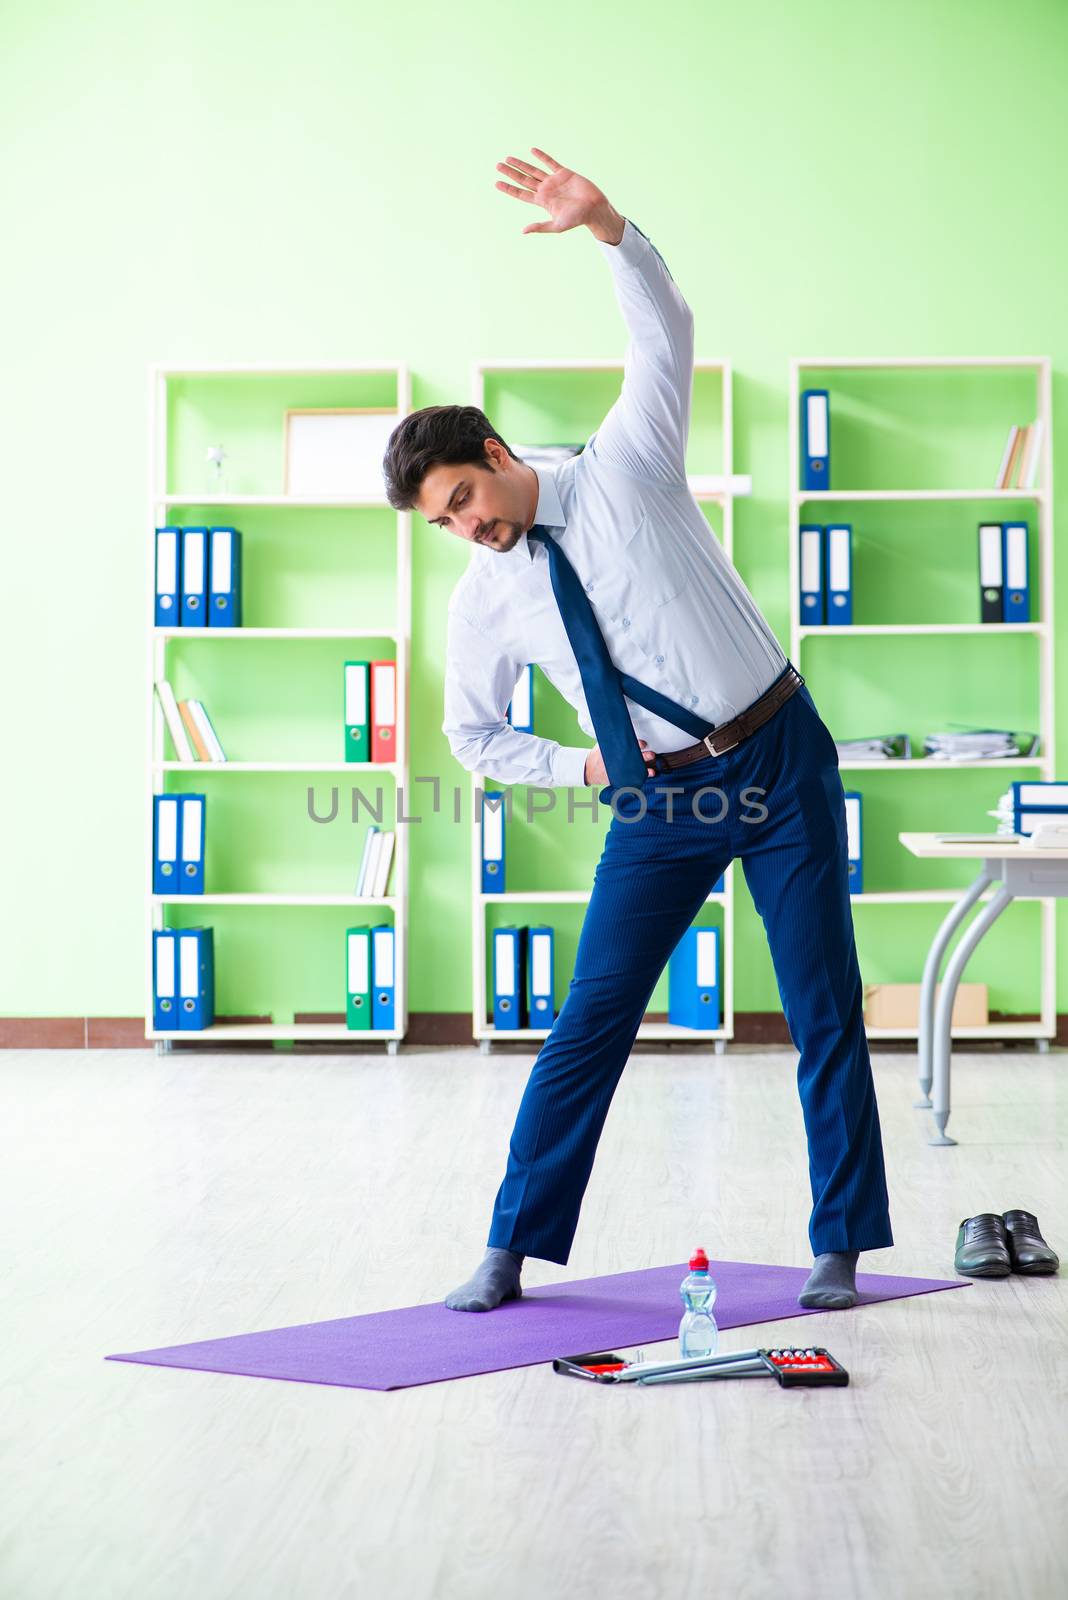 Employee doing exercises during break at work